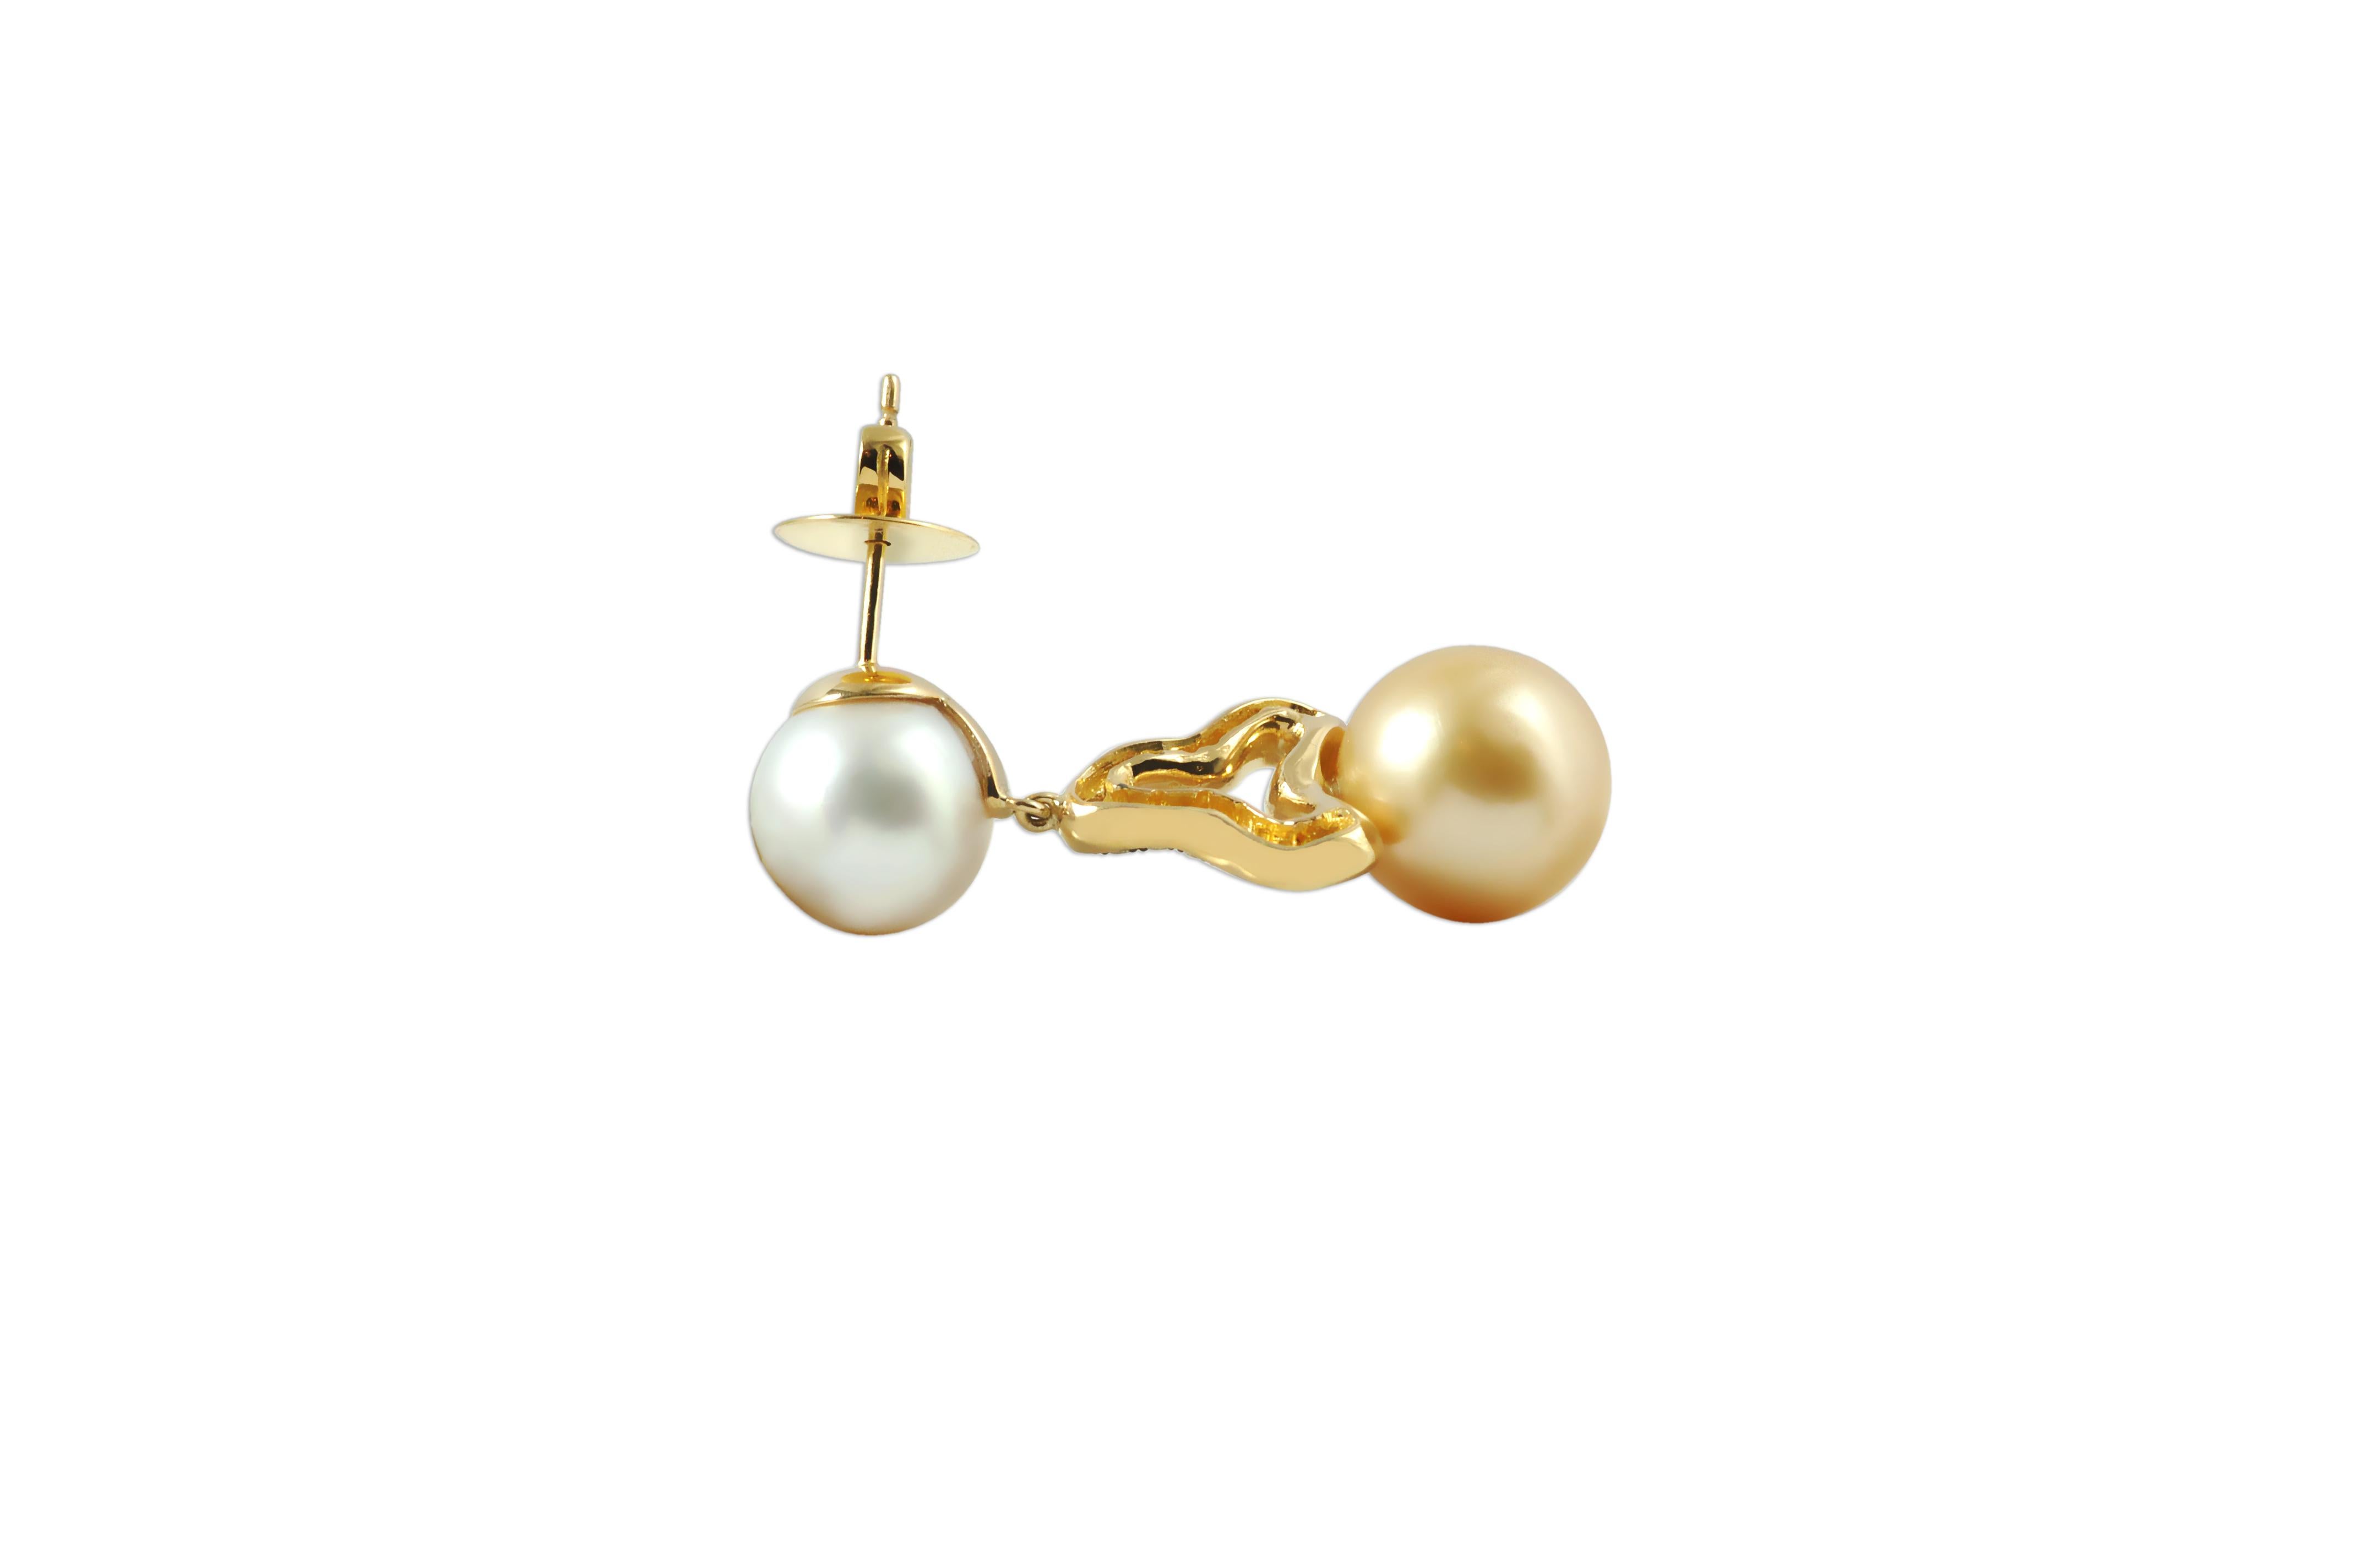 South Sea Pearl with Diamond 0.42 carat Earrings Set in 18 Karat Gold Settings

Width: 0.9 cm
Length: 4.0 cm 
Weight: 16.97 grams

